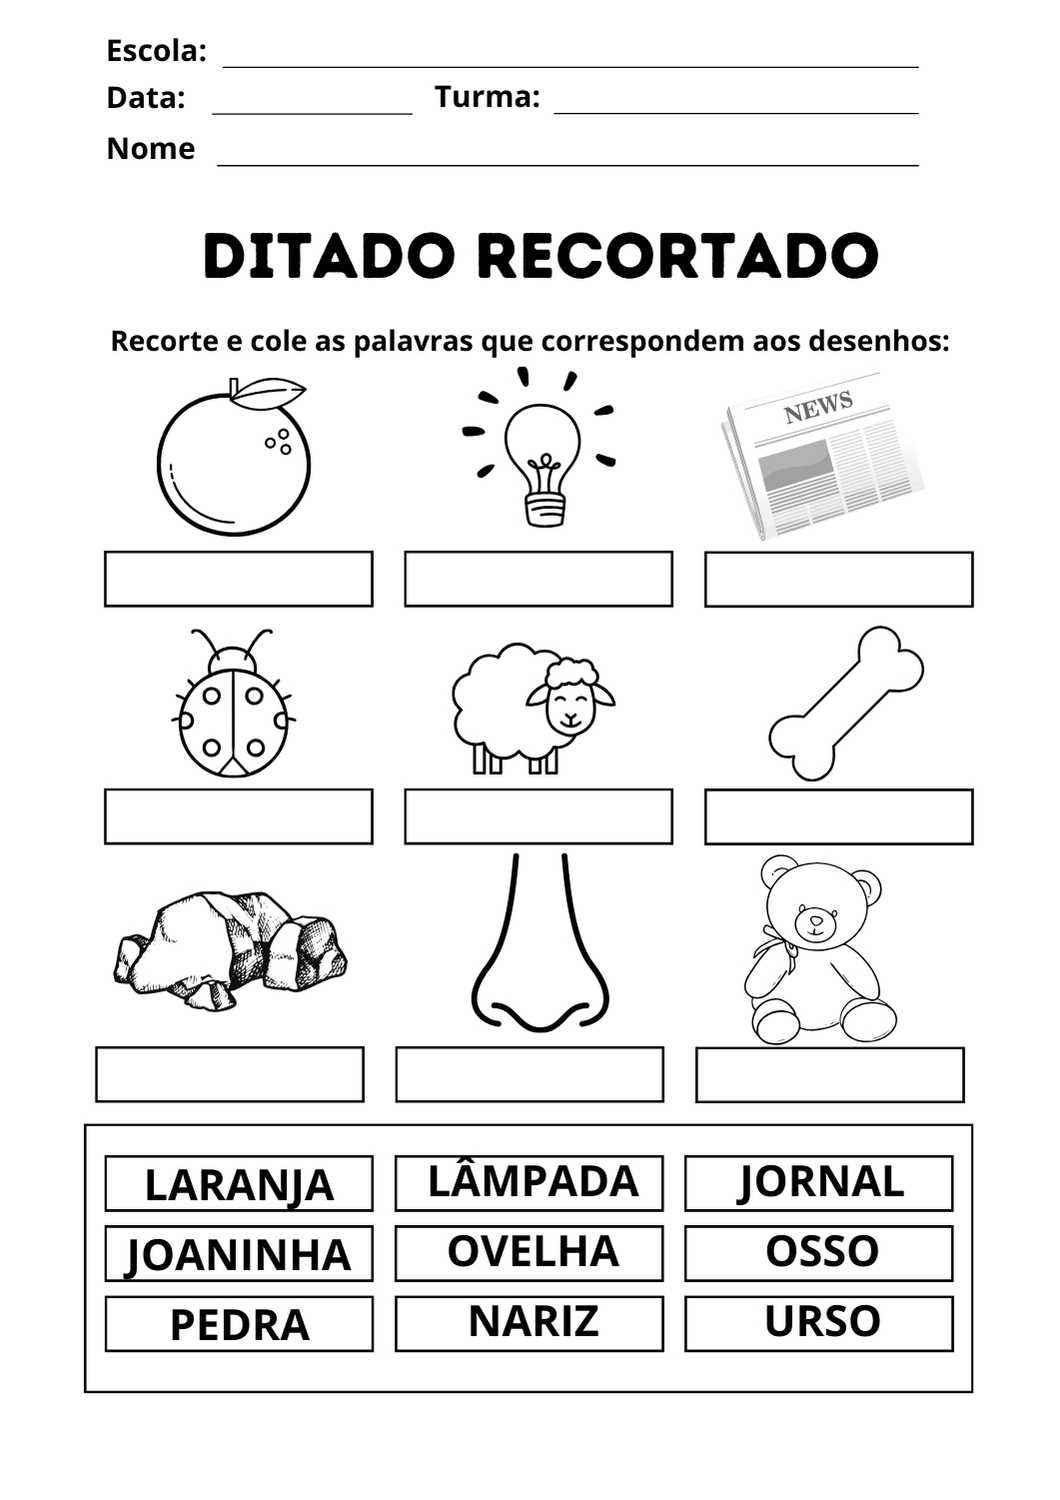 DITADO RECORTADO DE PALAVRAS COMPLEXAS